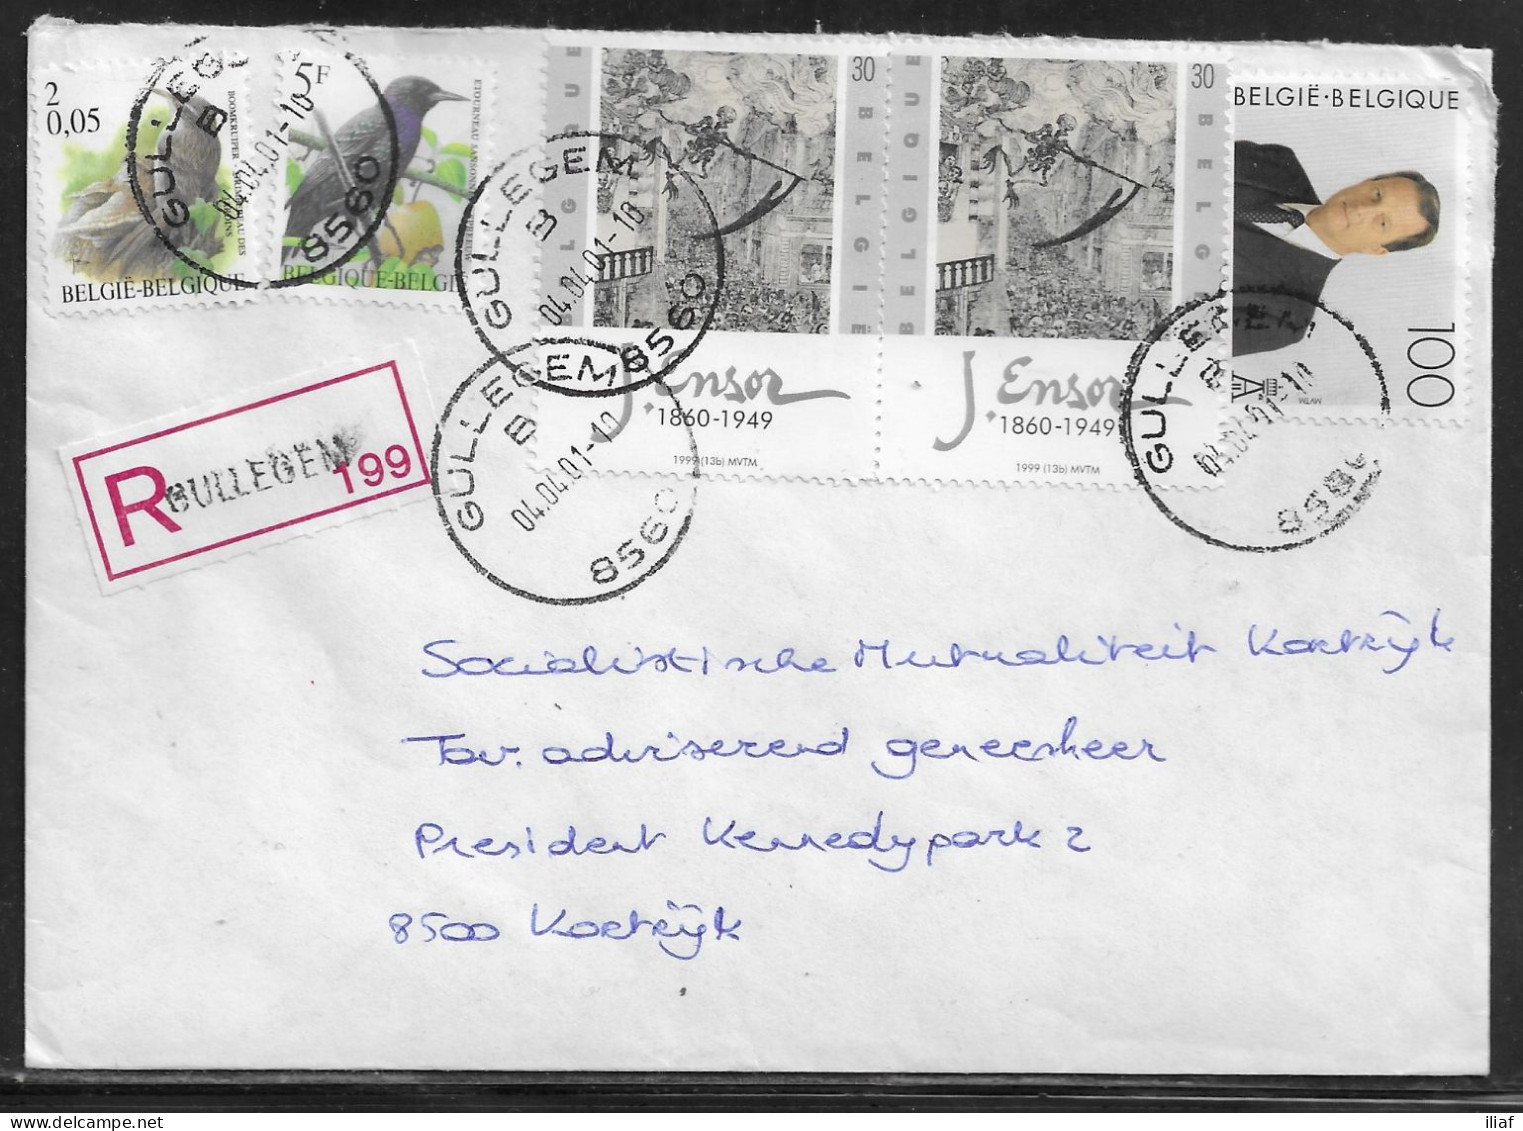 Belgium. Stamps Mi. 2970, Mi. 2690, Mi. 2882, Mi. 2628 on Registered Letter Sent From Gullegem 04.04.2001 for Kortrijk - Covers & Documents